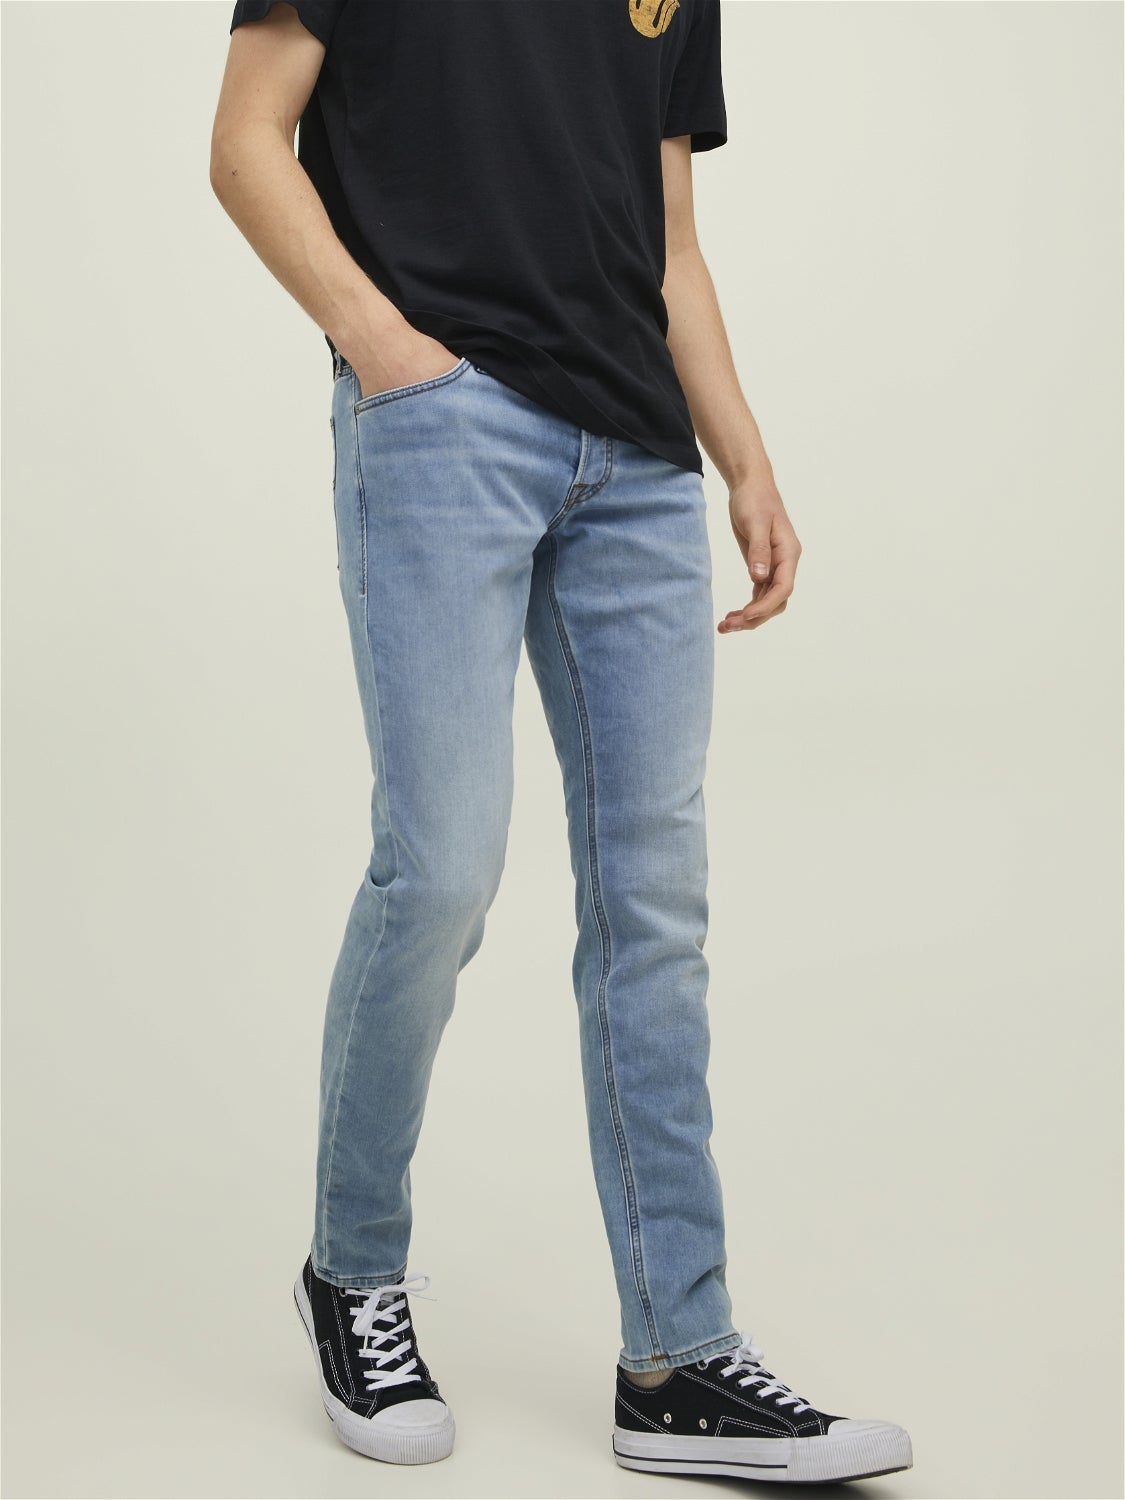 discount 57% Blue 42                  EU MEN FASHION Jeans Worn-in Jack & Jones Jeggings & Skinny & Slim 